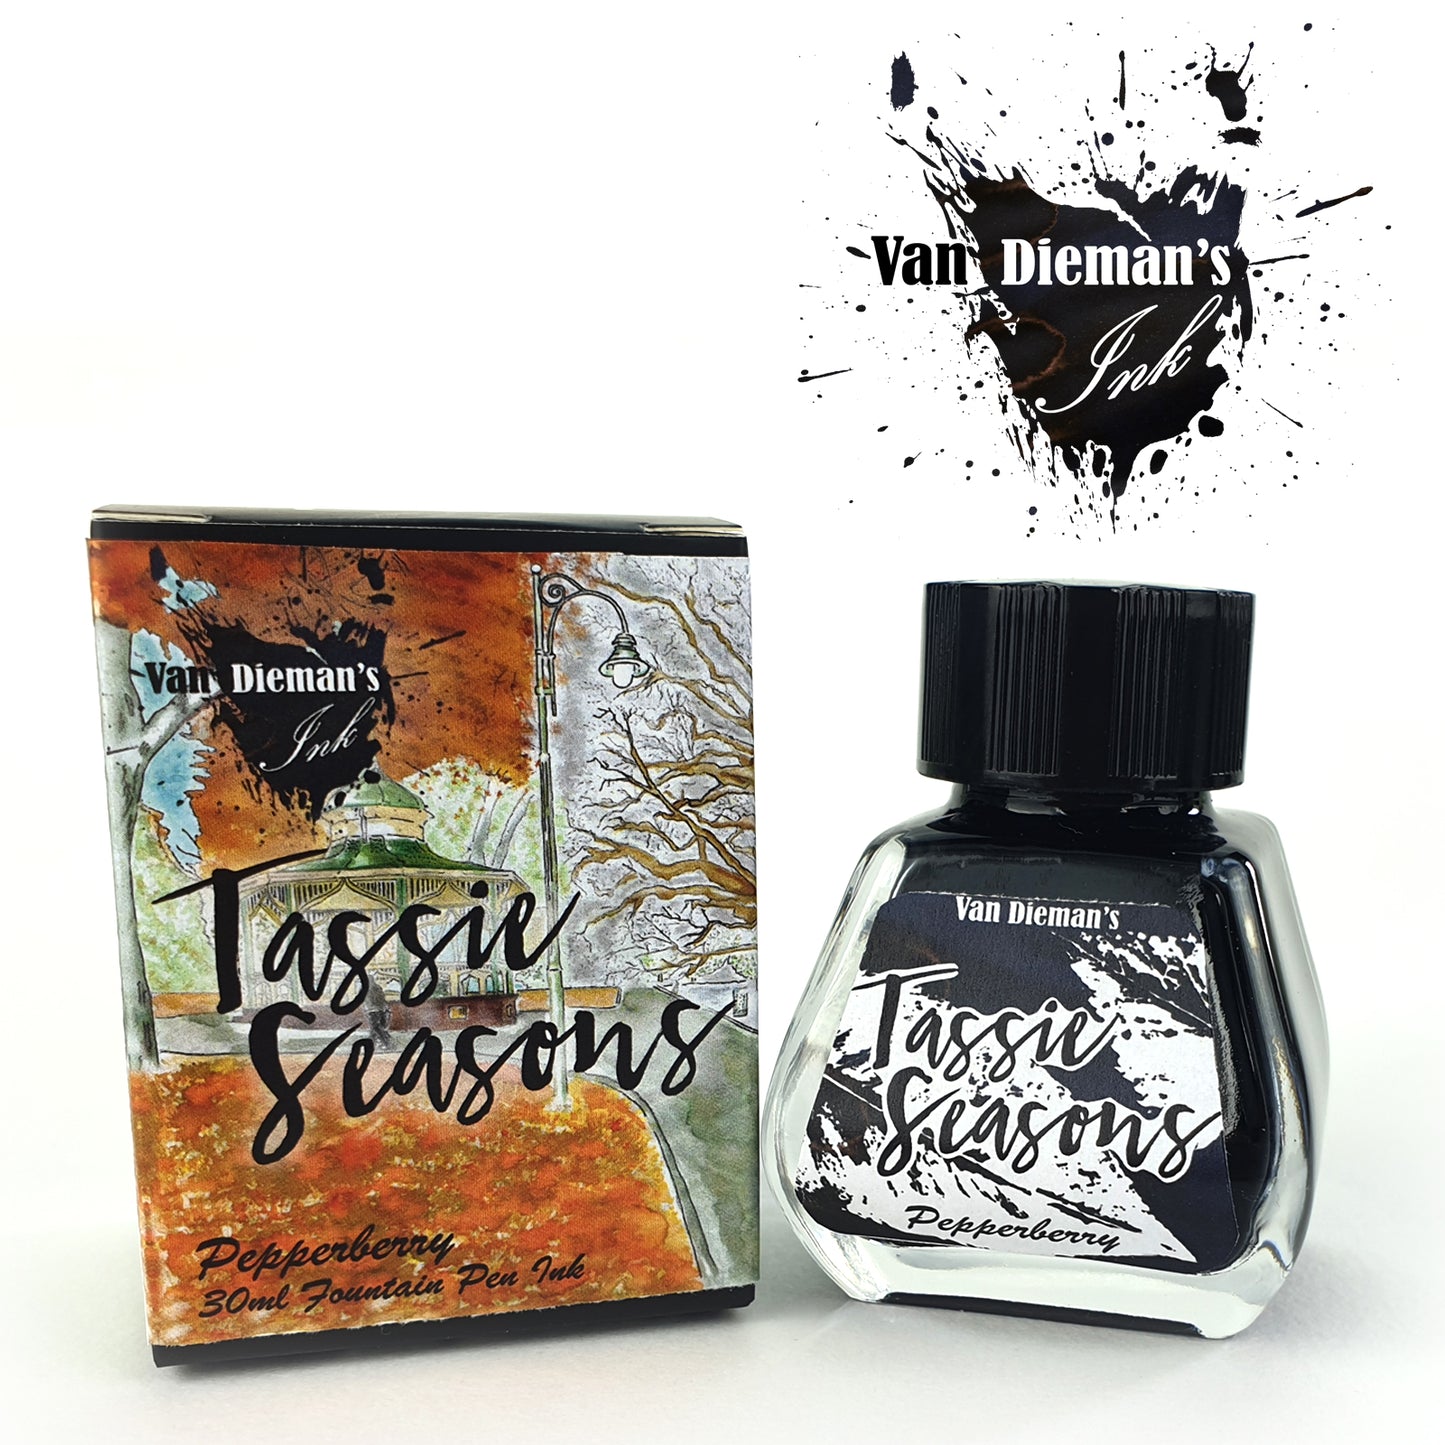 Van Dieman's Tassie Seasons (Autumn) Pepperberry - Fountain Pen Ink